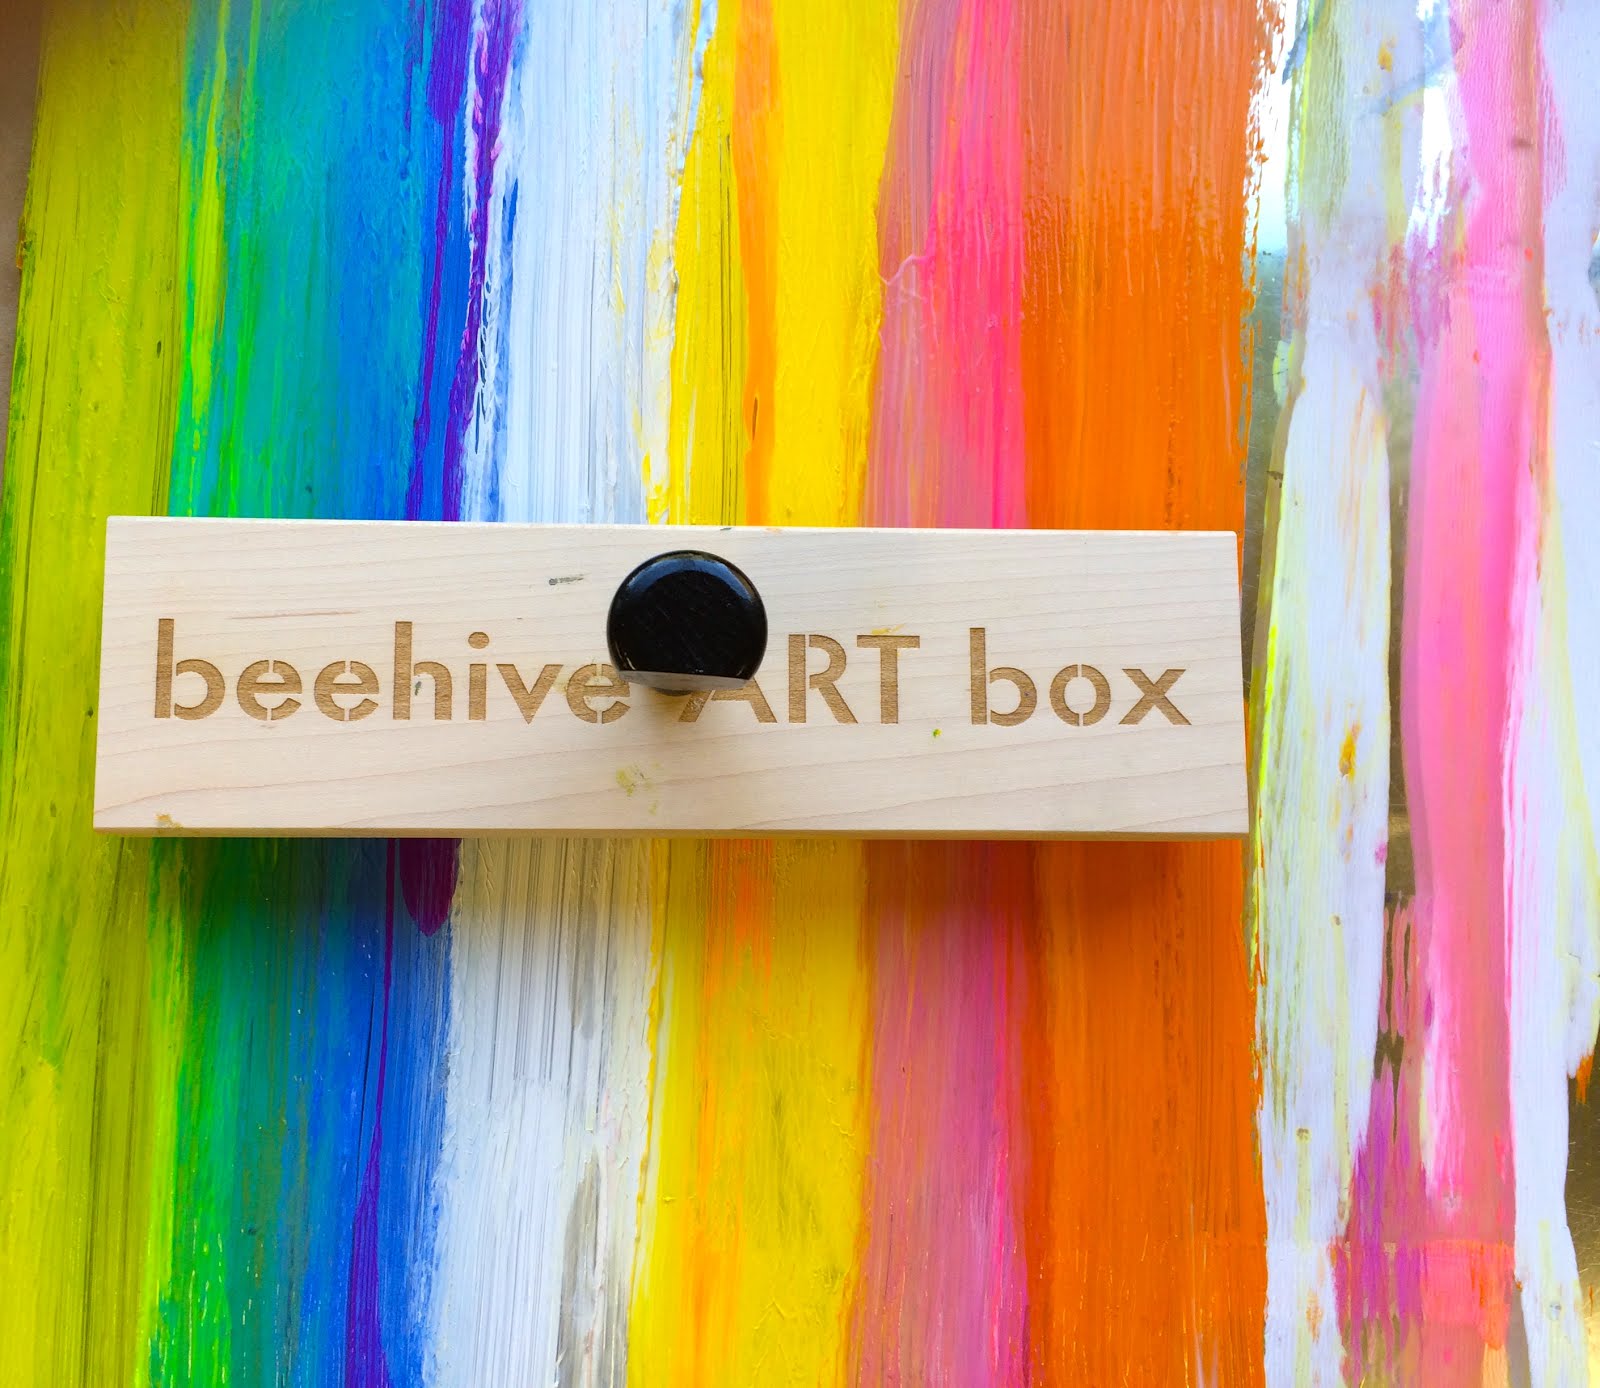 ART box